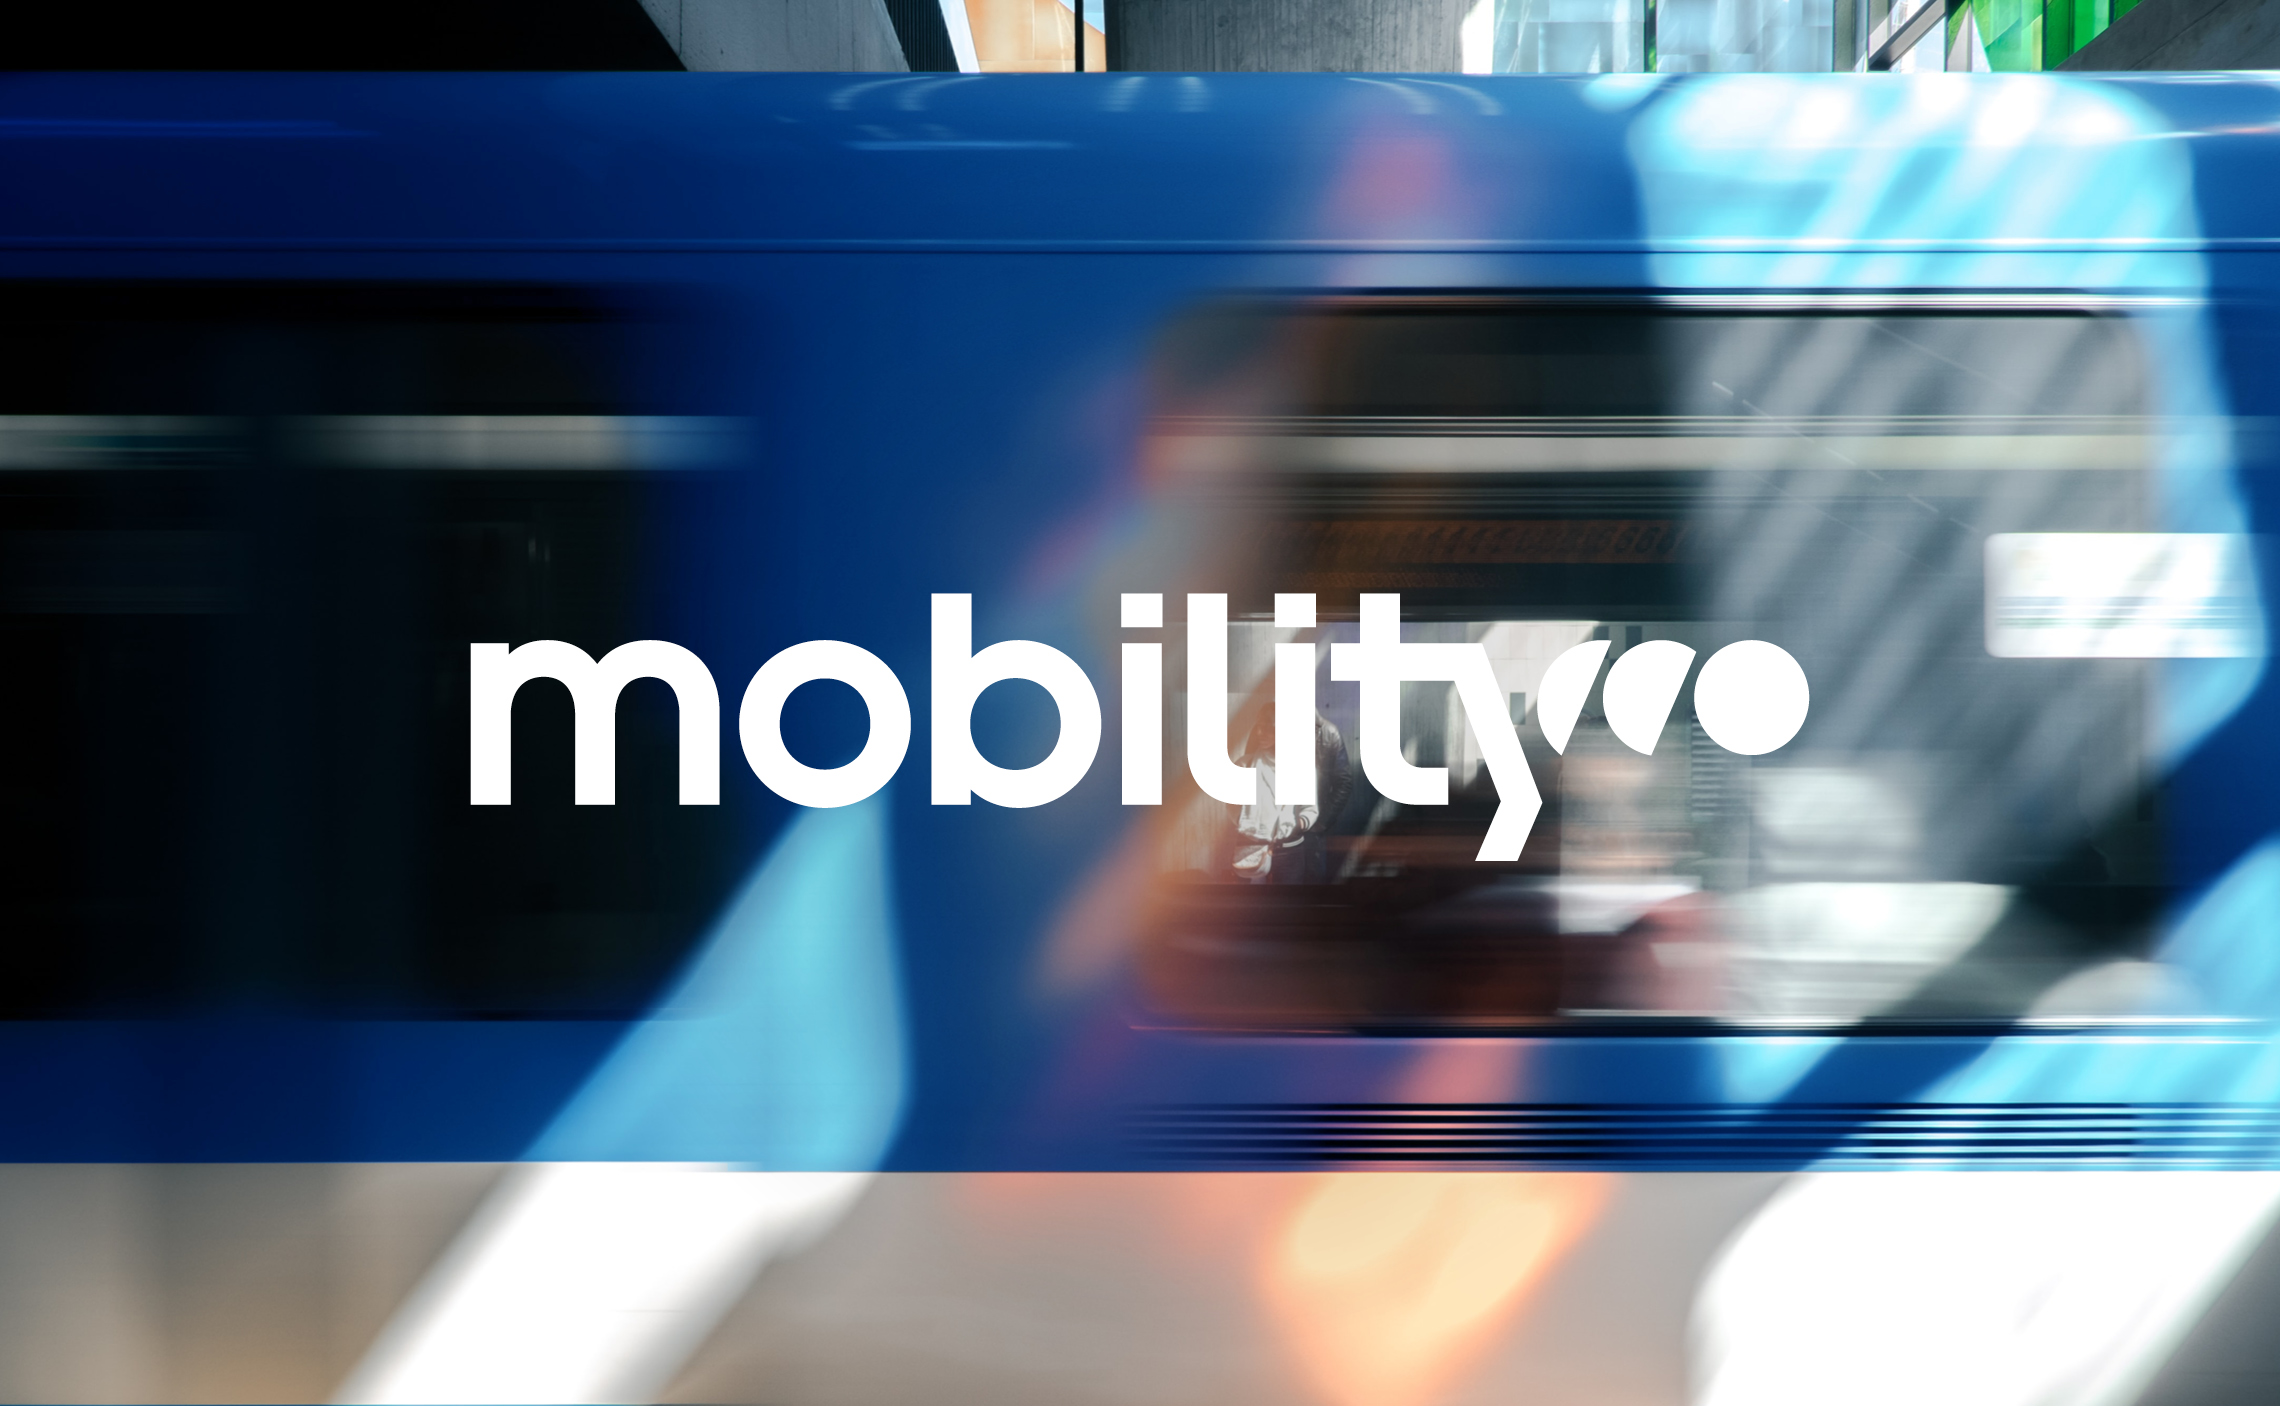 logo mobility version blanche sur photo